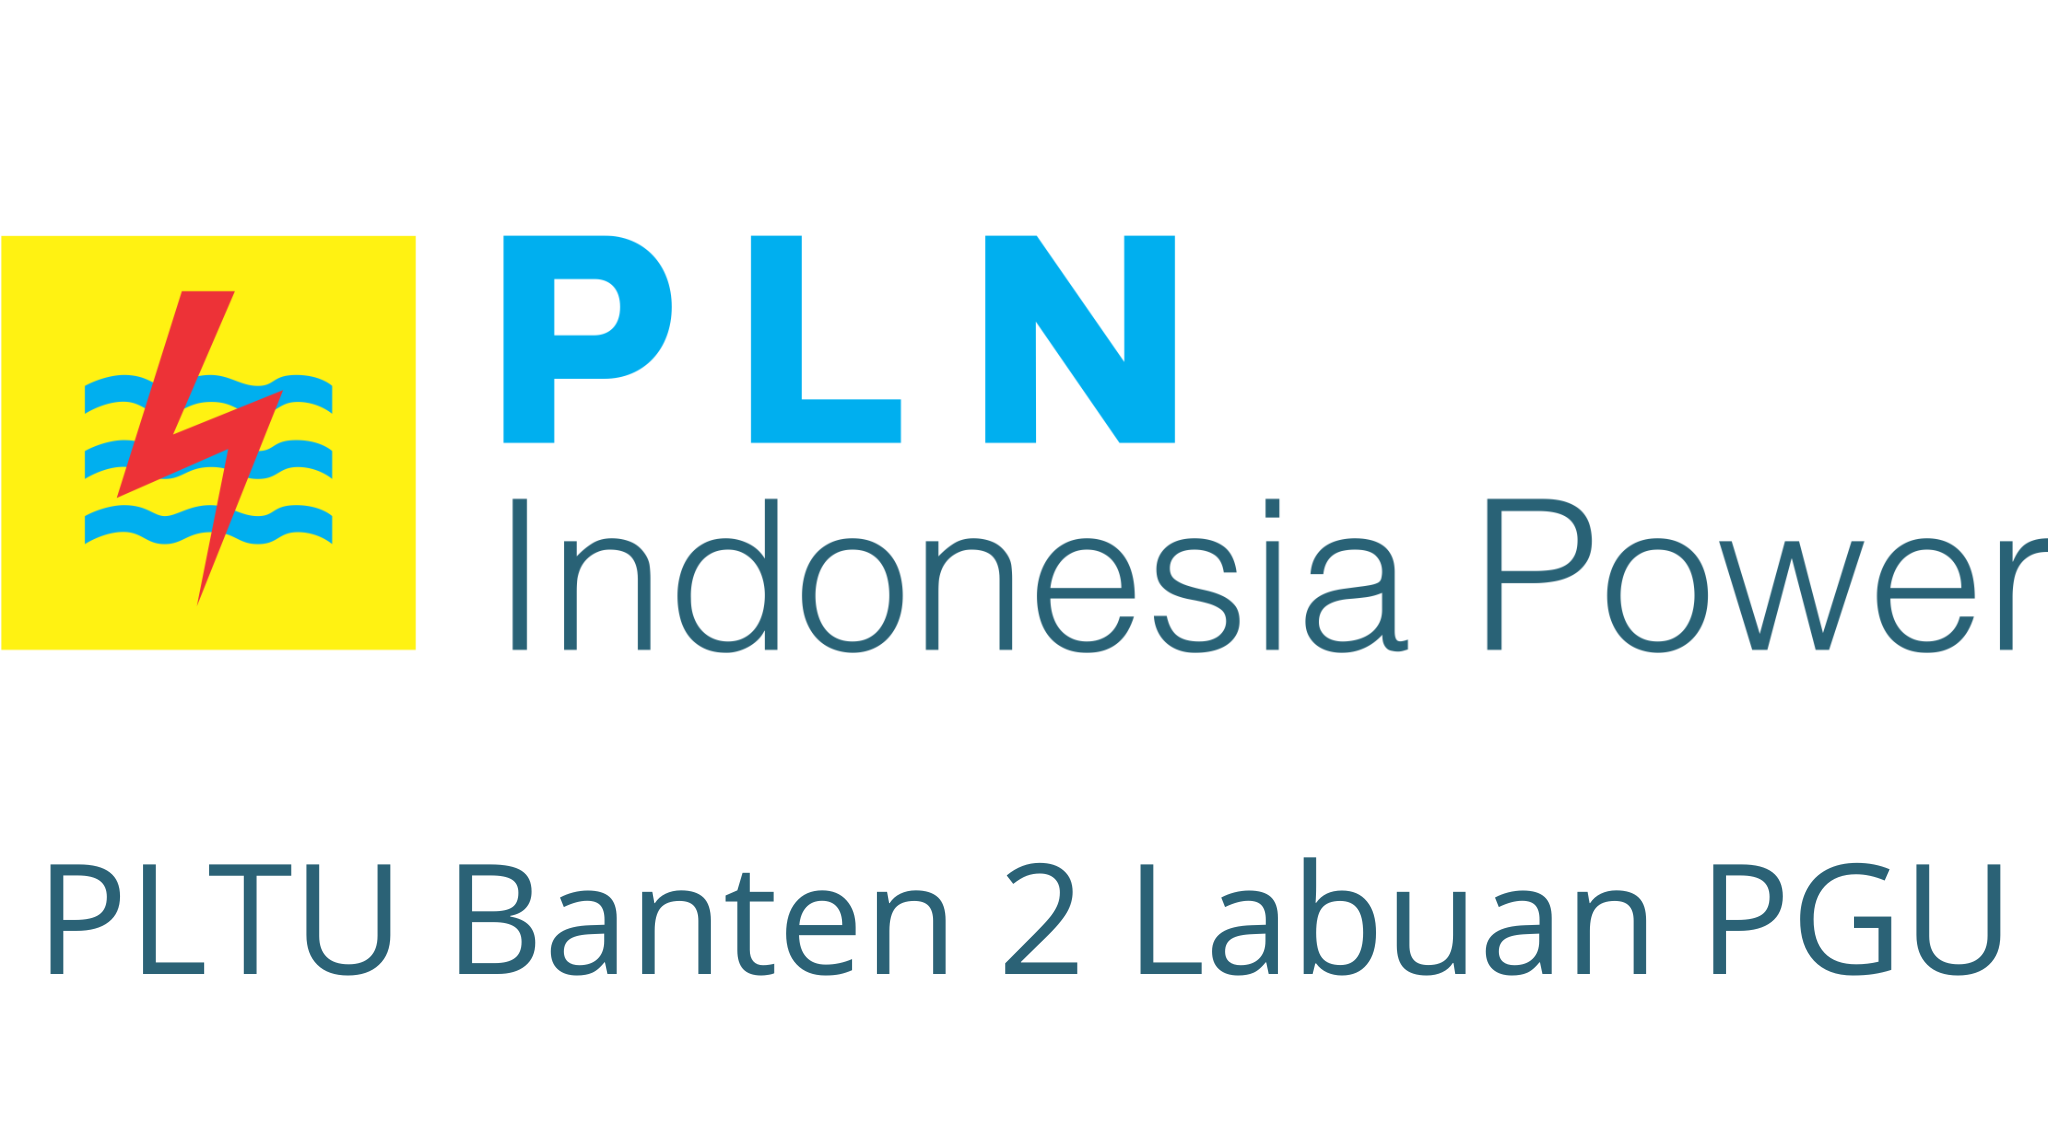 PT PLN Indonesia Power PLTU Banten 2 Labuan PGU